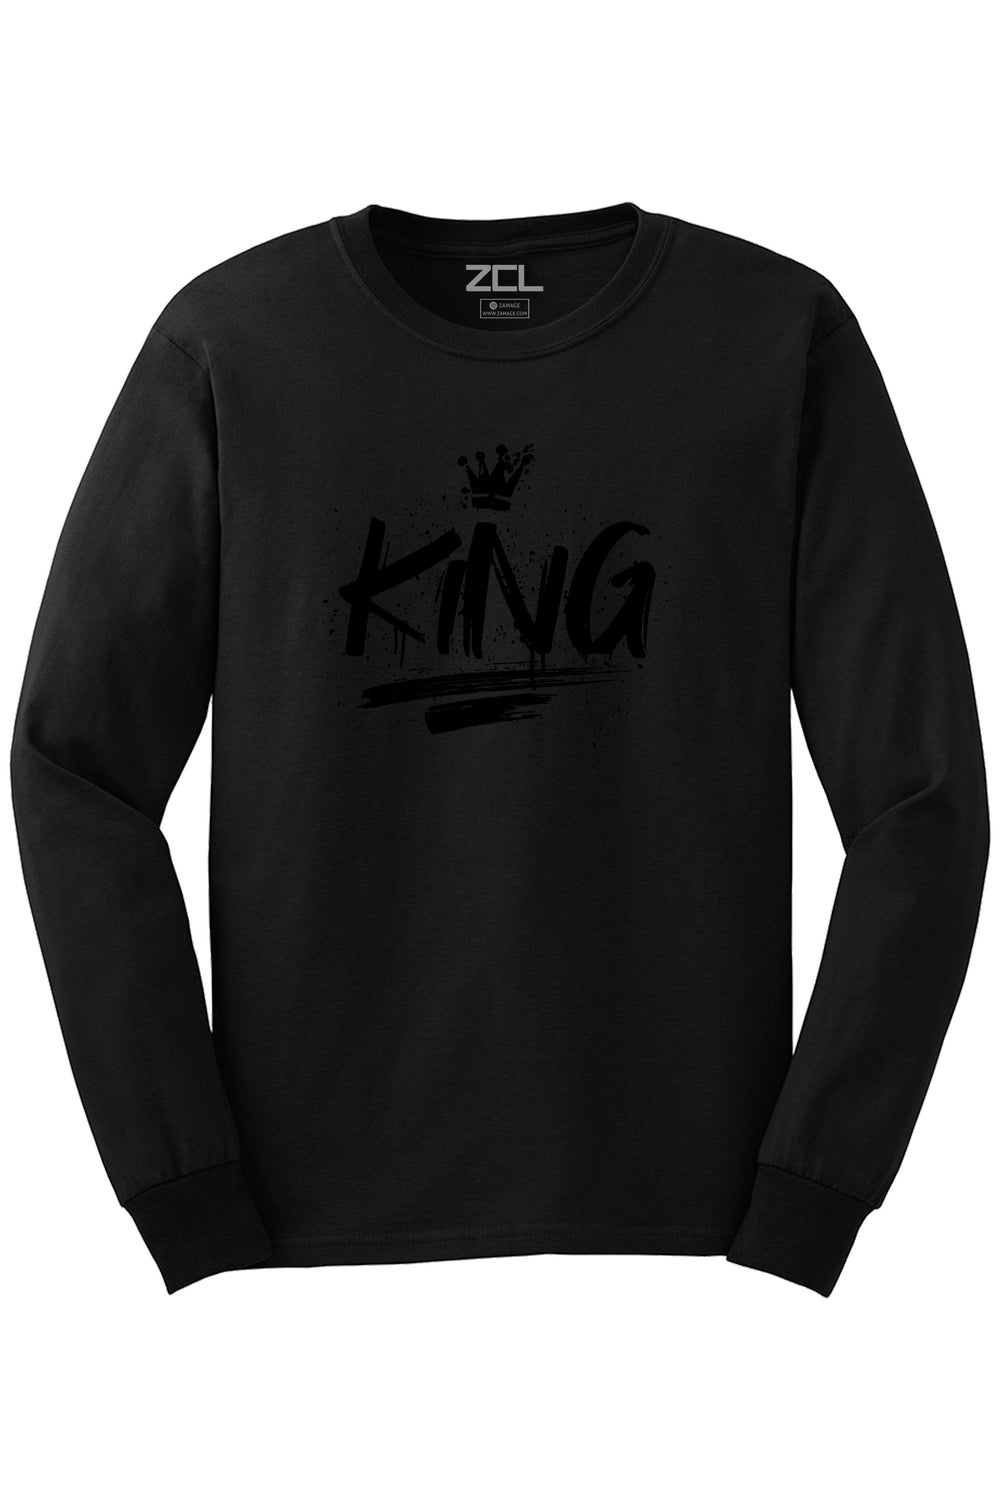 King Long Sleeve Tee (Black Logo) - Zamage